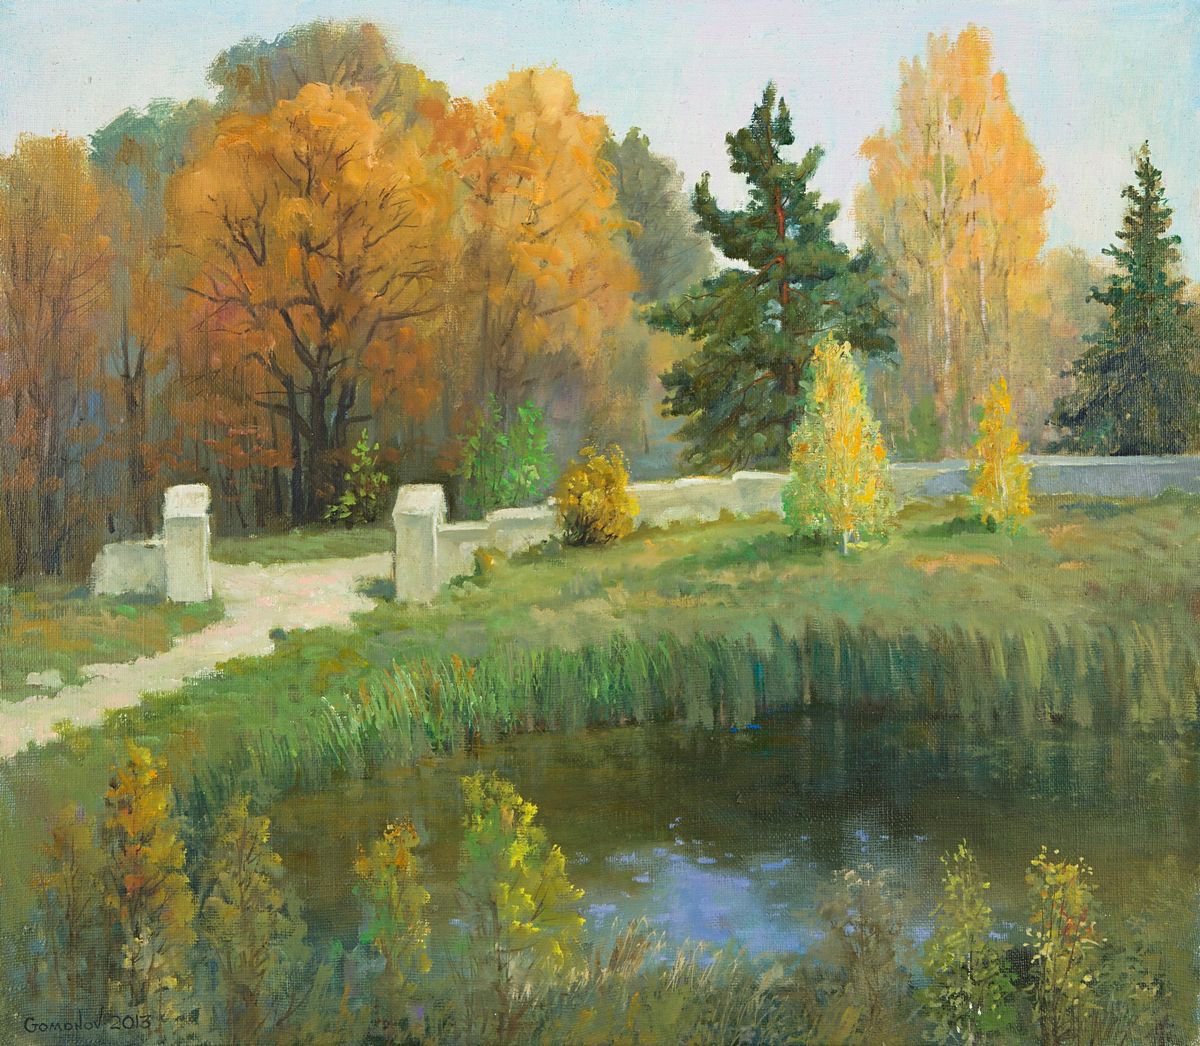 The Pond in Polenovo by Leanid Homanav